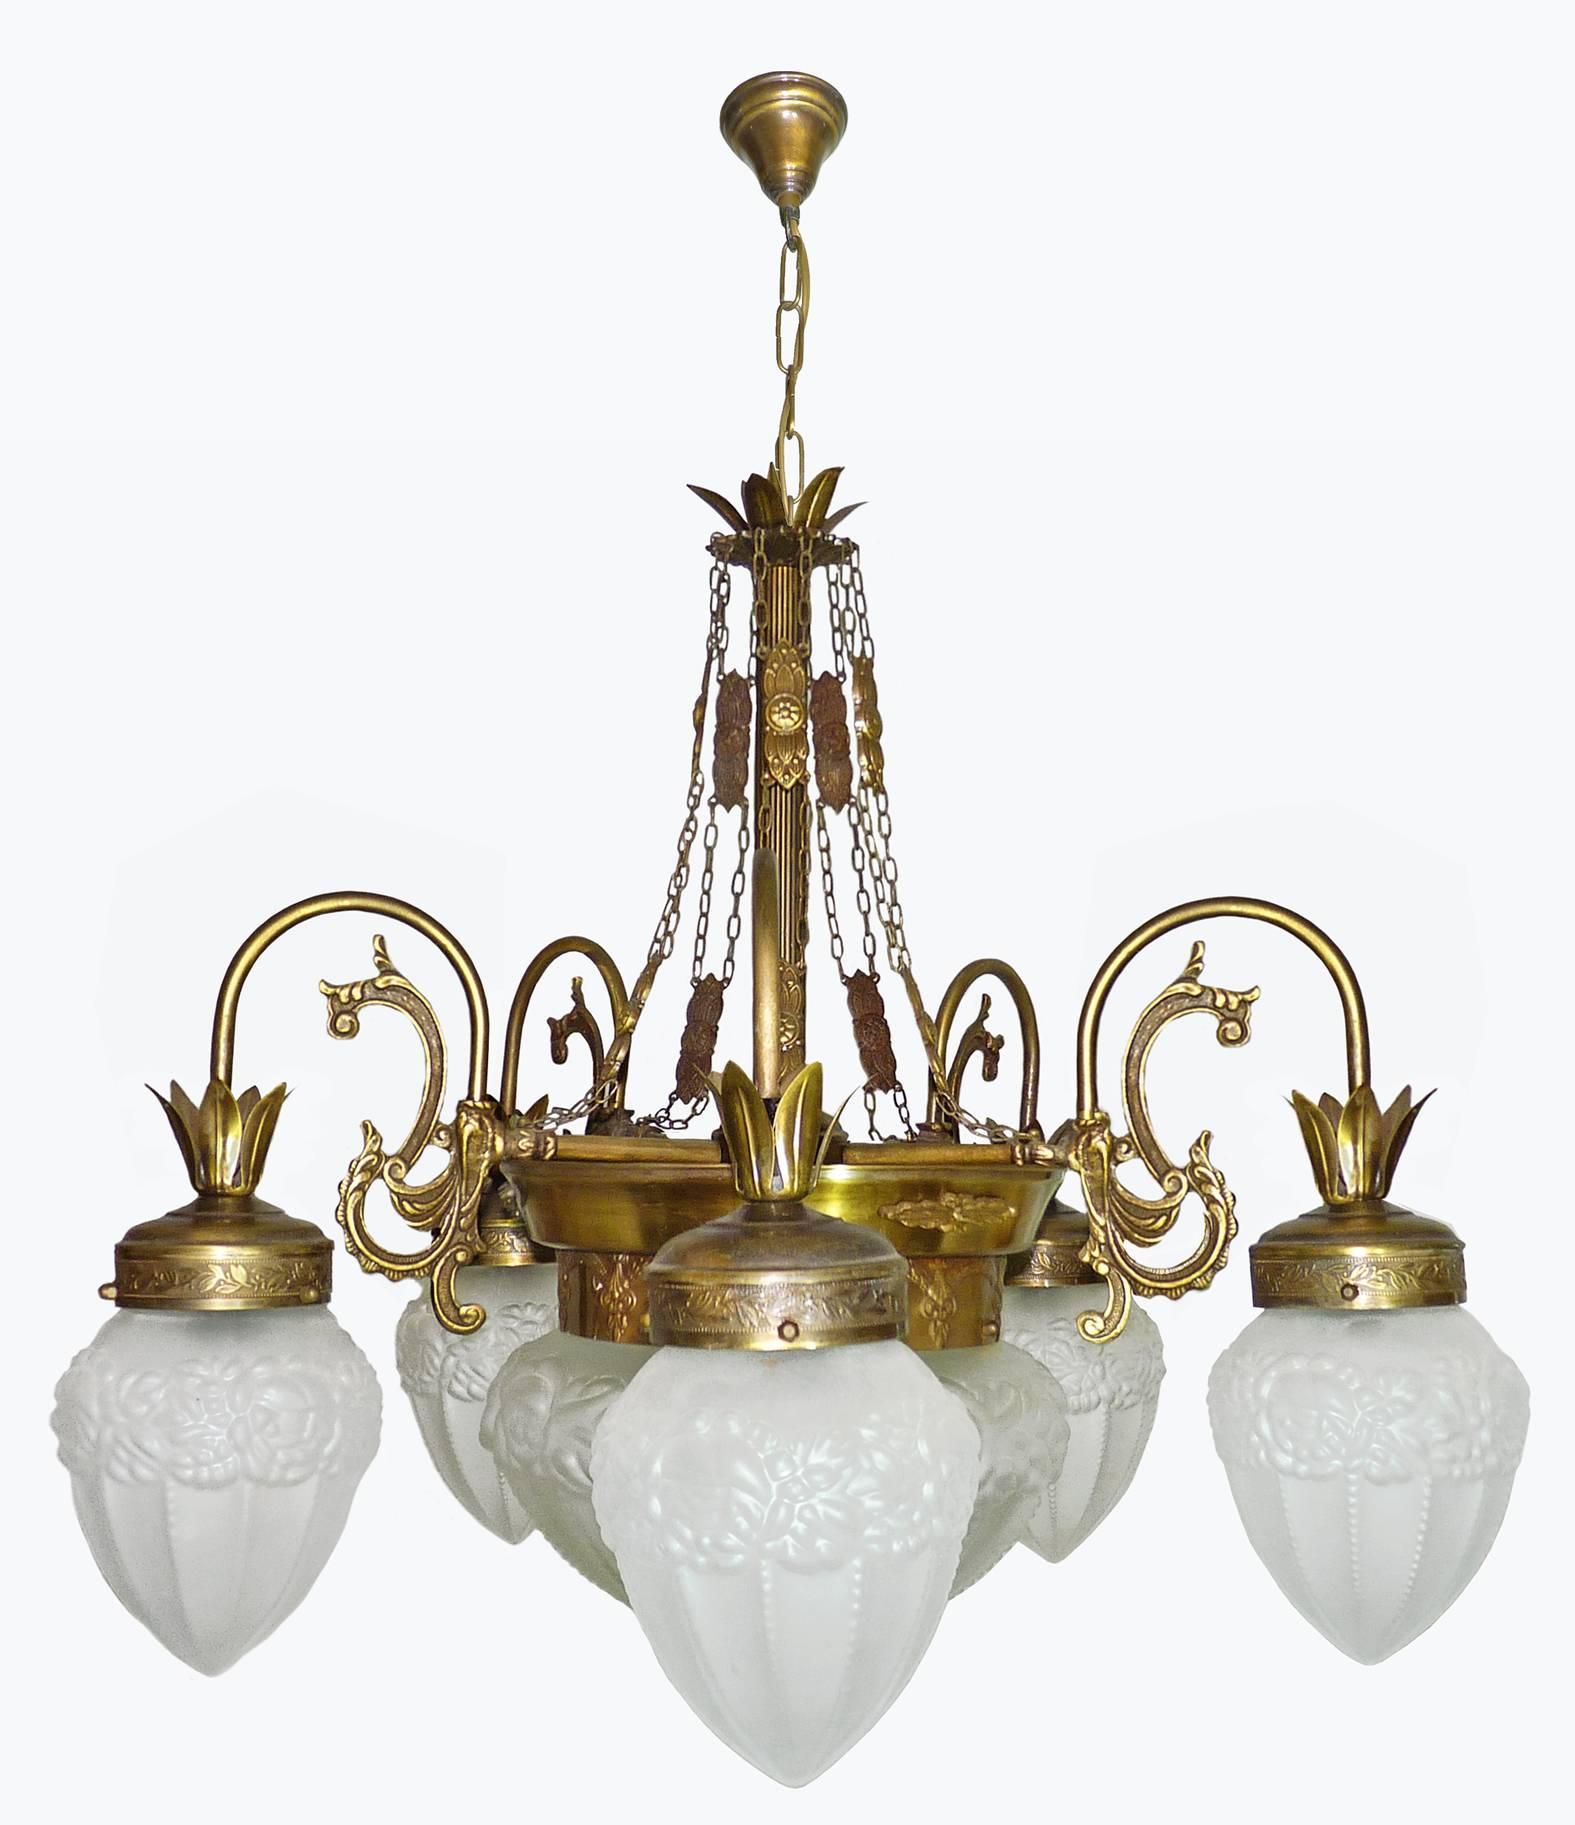 Frosted Art Deco Art Nouveau Gold and Bronze Color, Glass Degué Style Chandelier For Sale